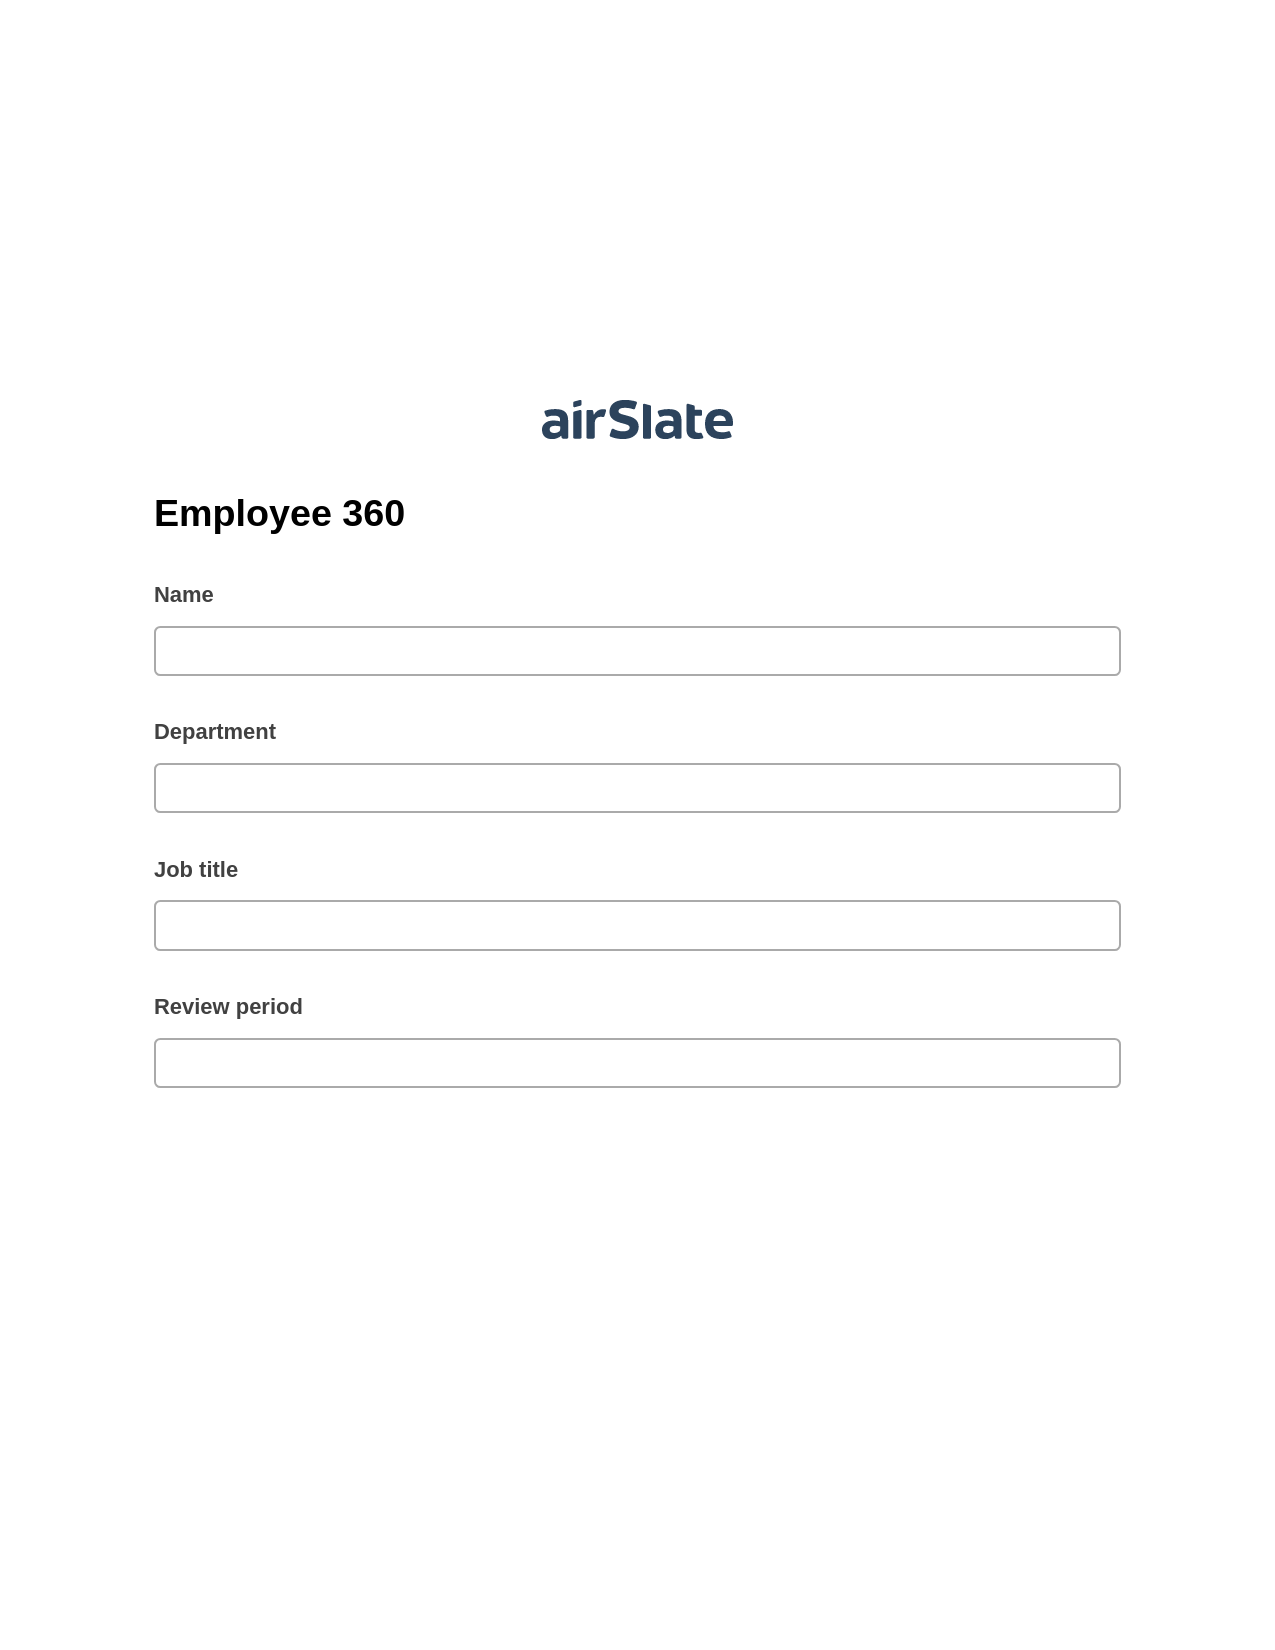 Employee 360 Pre-fill from CSV File Bot, Create MS Dynamics 365 Records Bot, Slack Notification Postfinish Bot